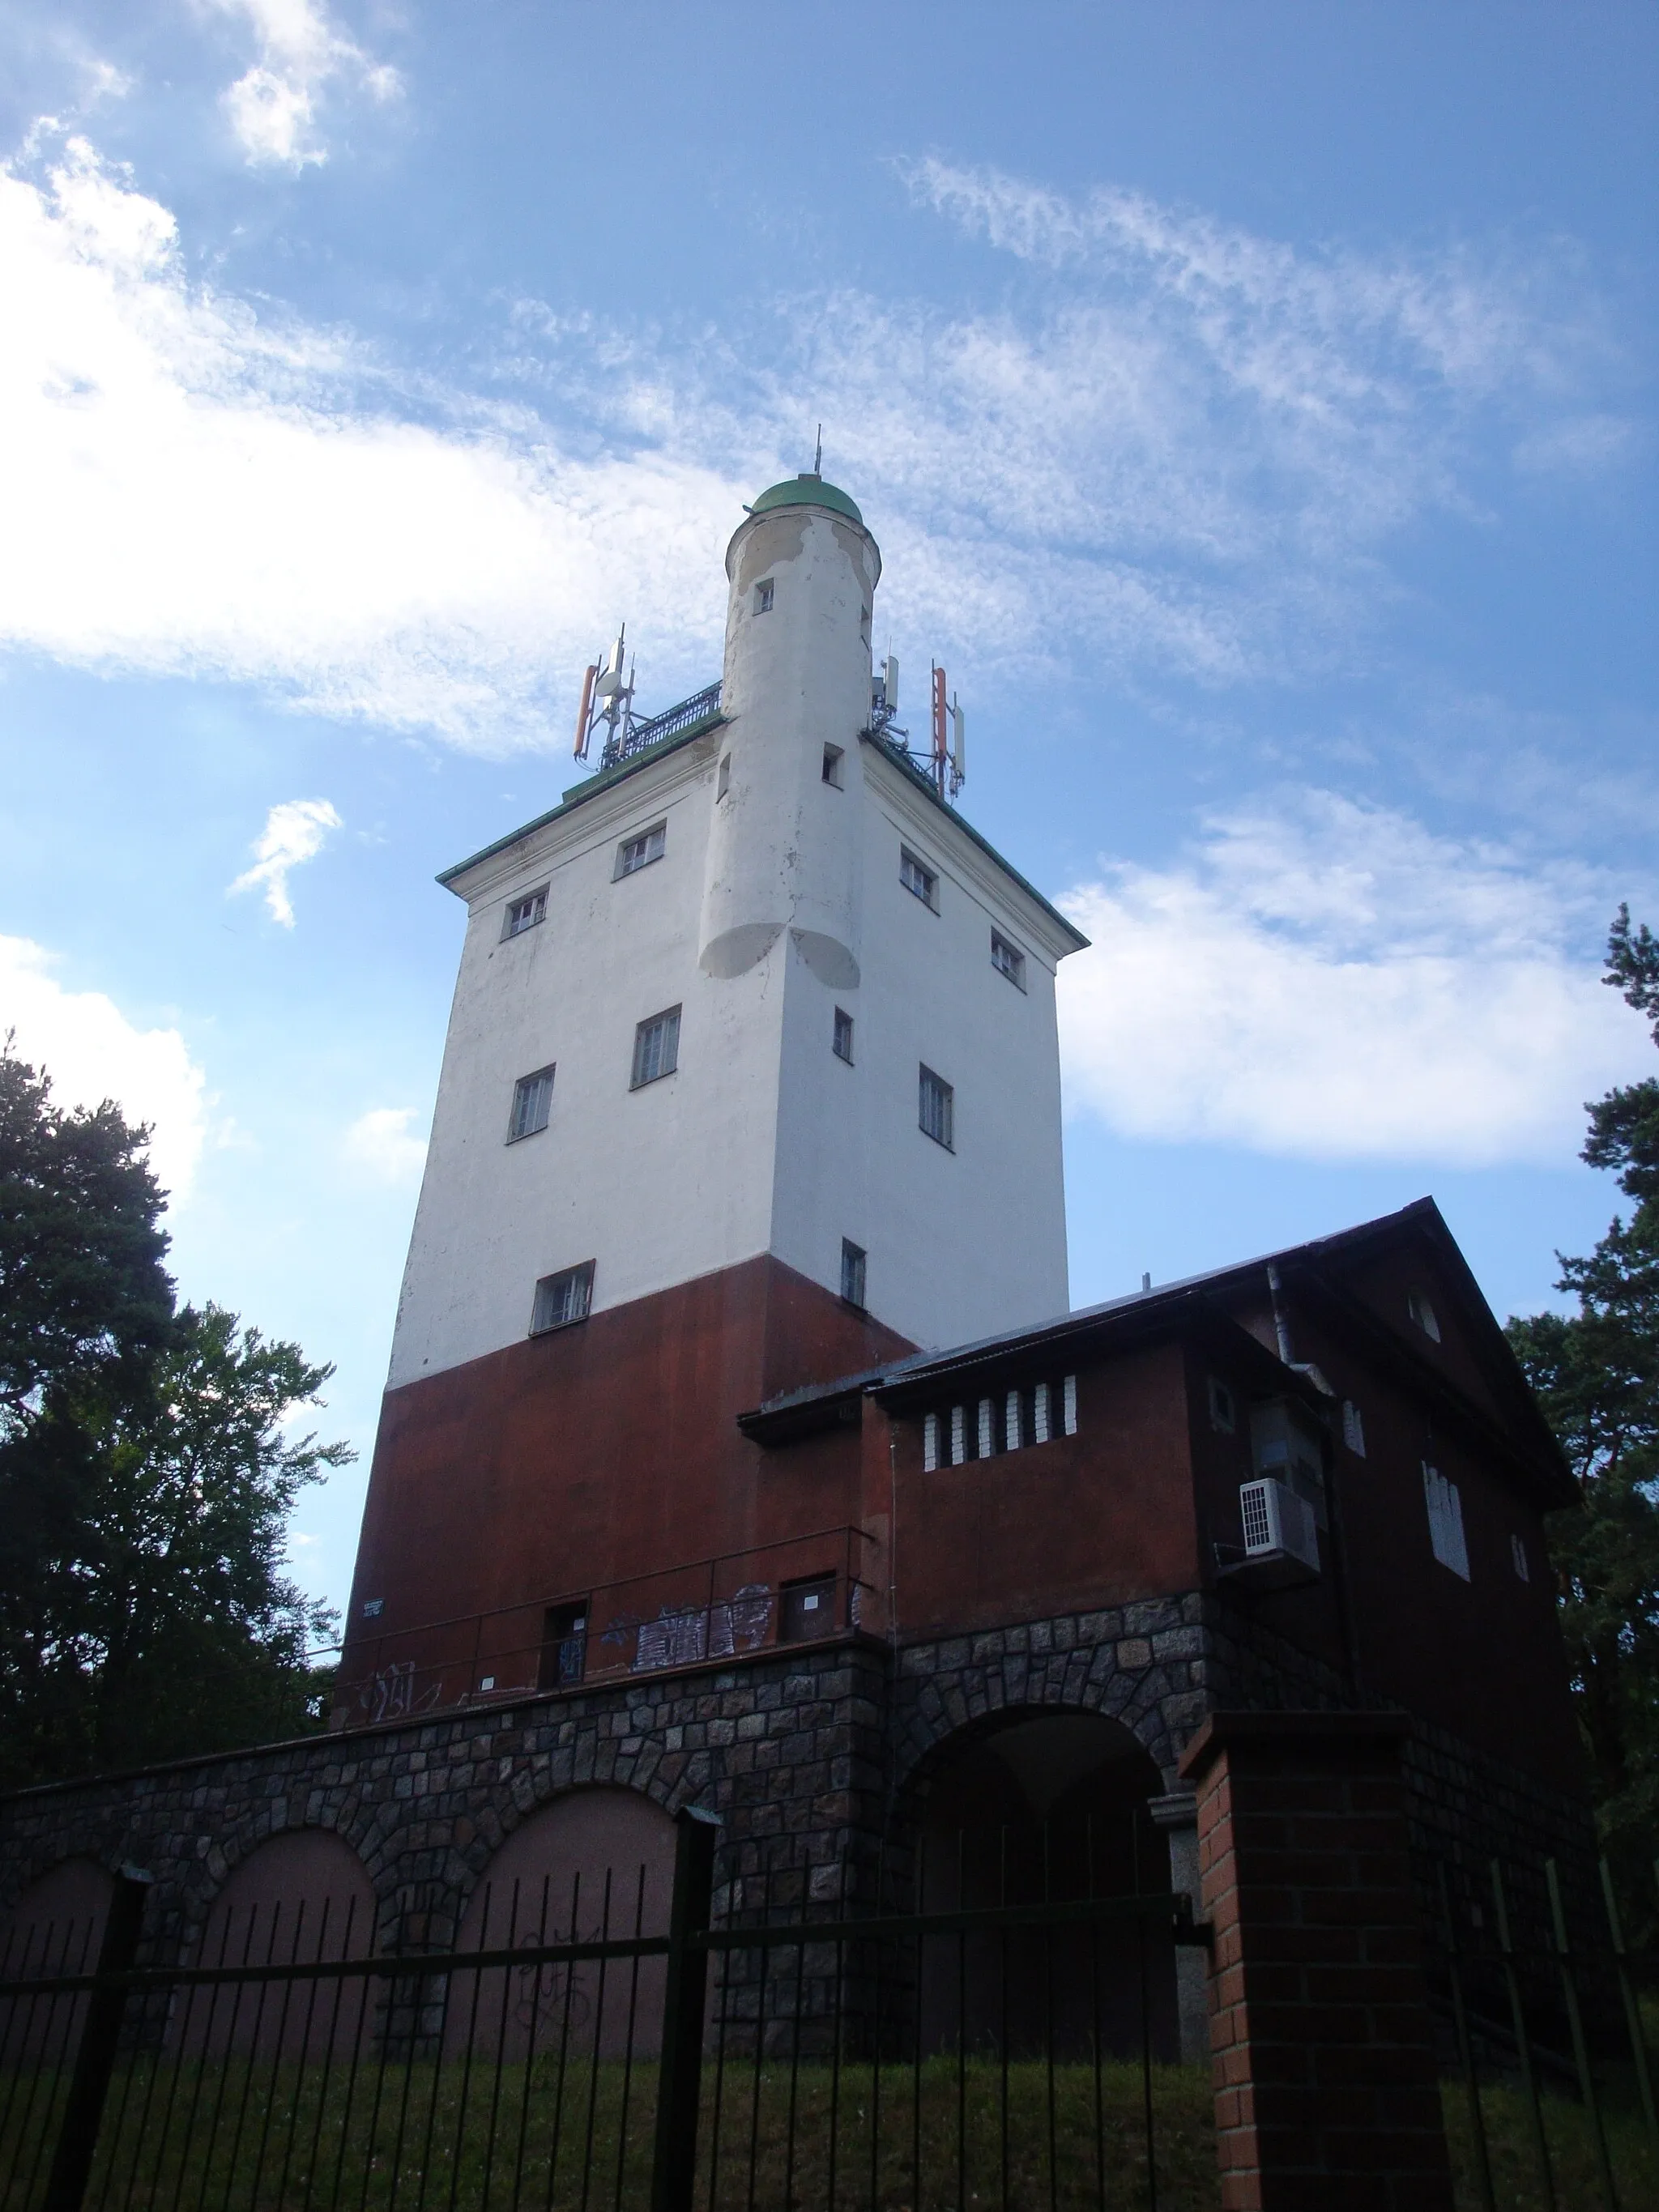 Photo showing: Water tower in Lębork, Poland